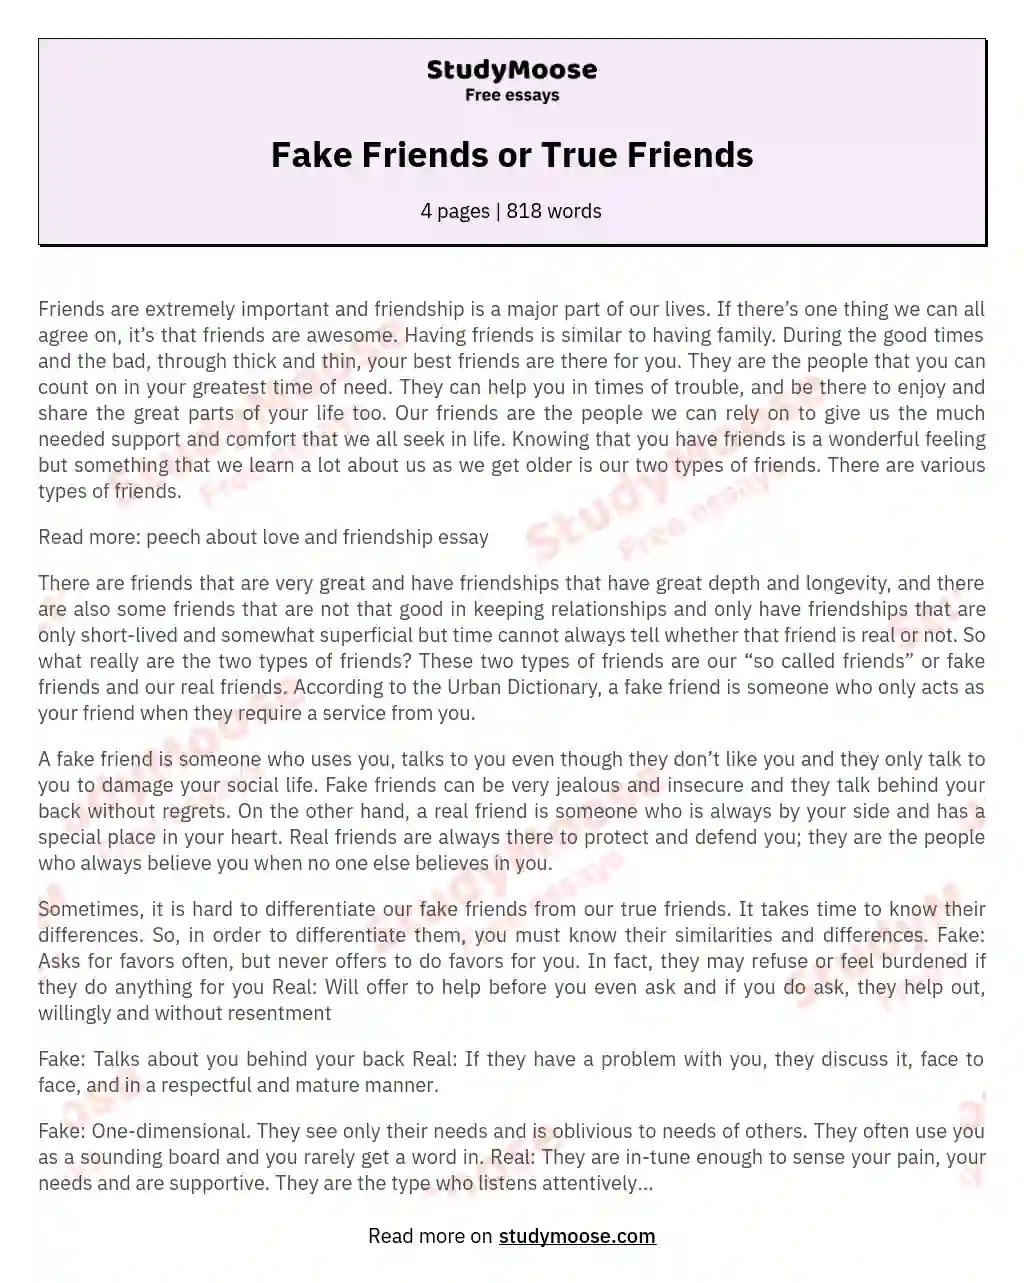 Fake Friends or True Friends essay